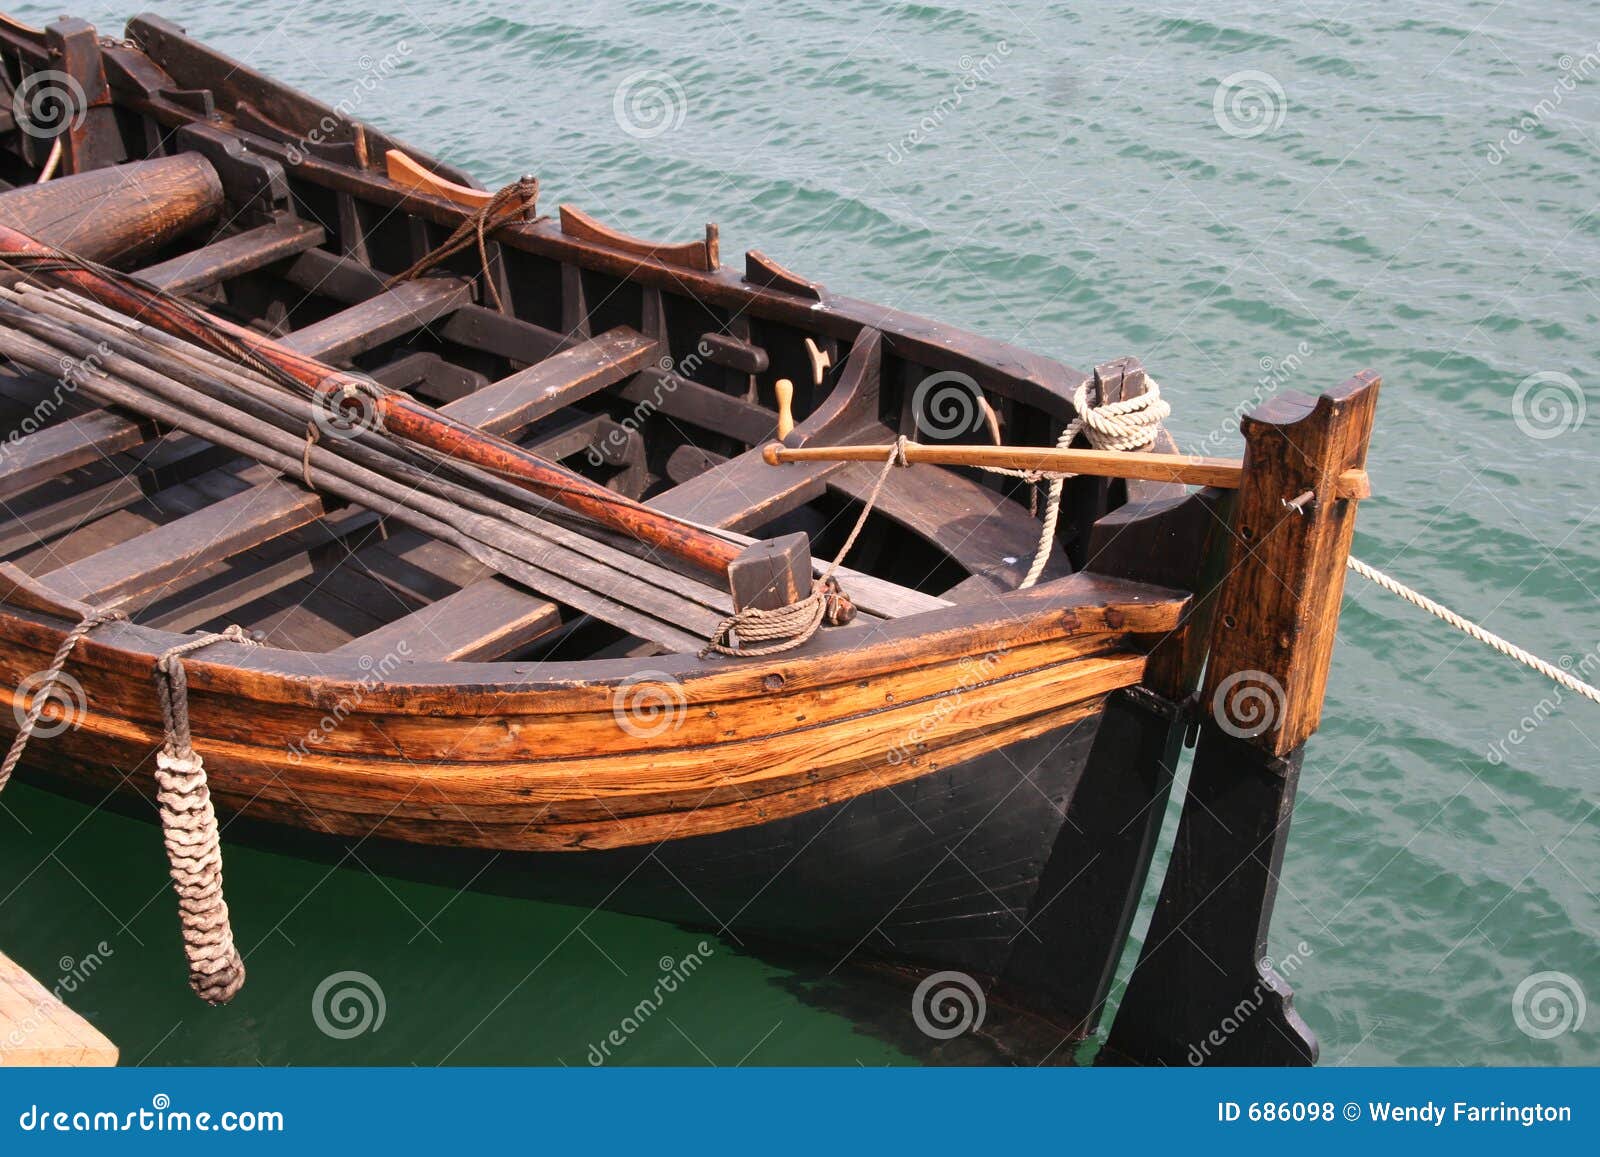 Wooden Sailboat Royalty Free Stock Photos - Image: 686098